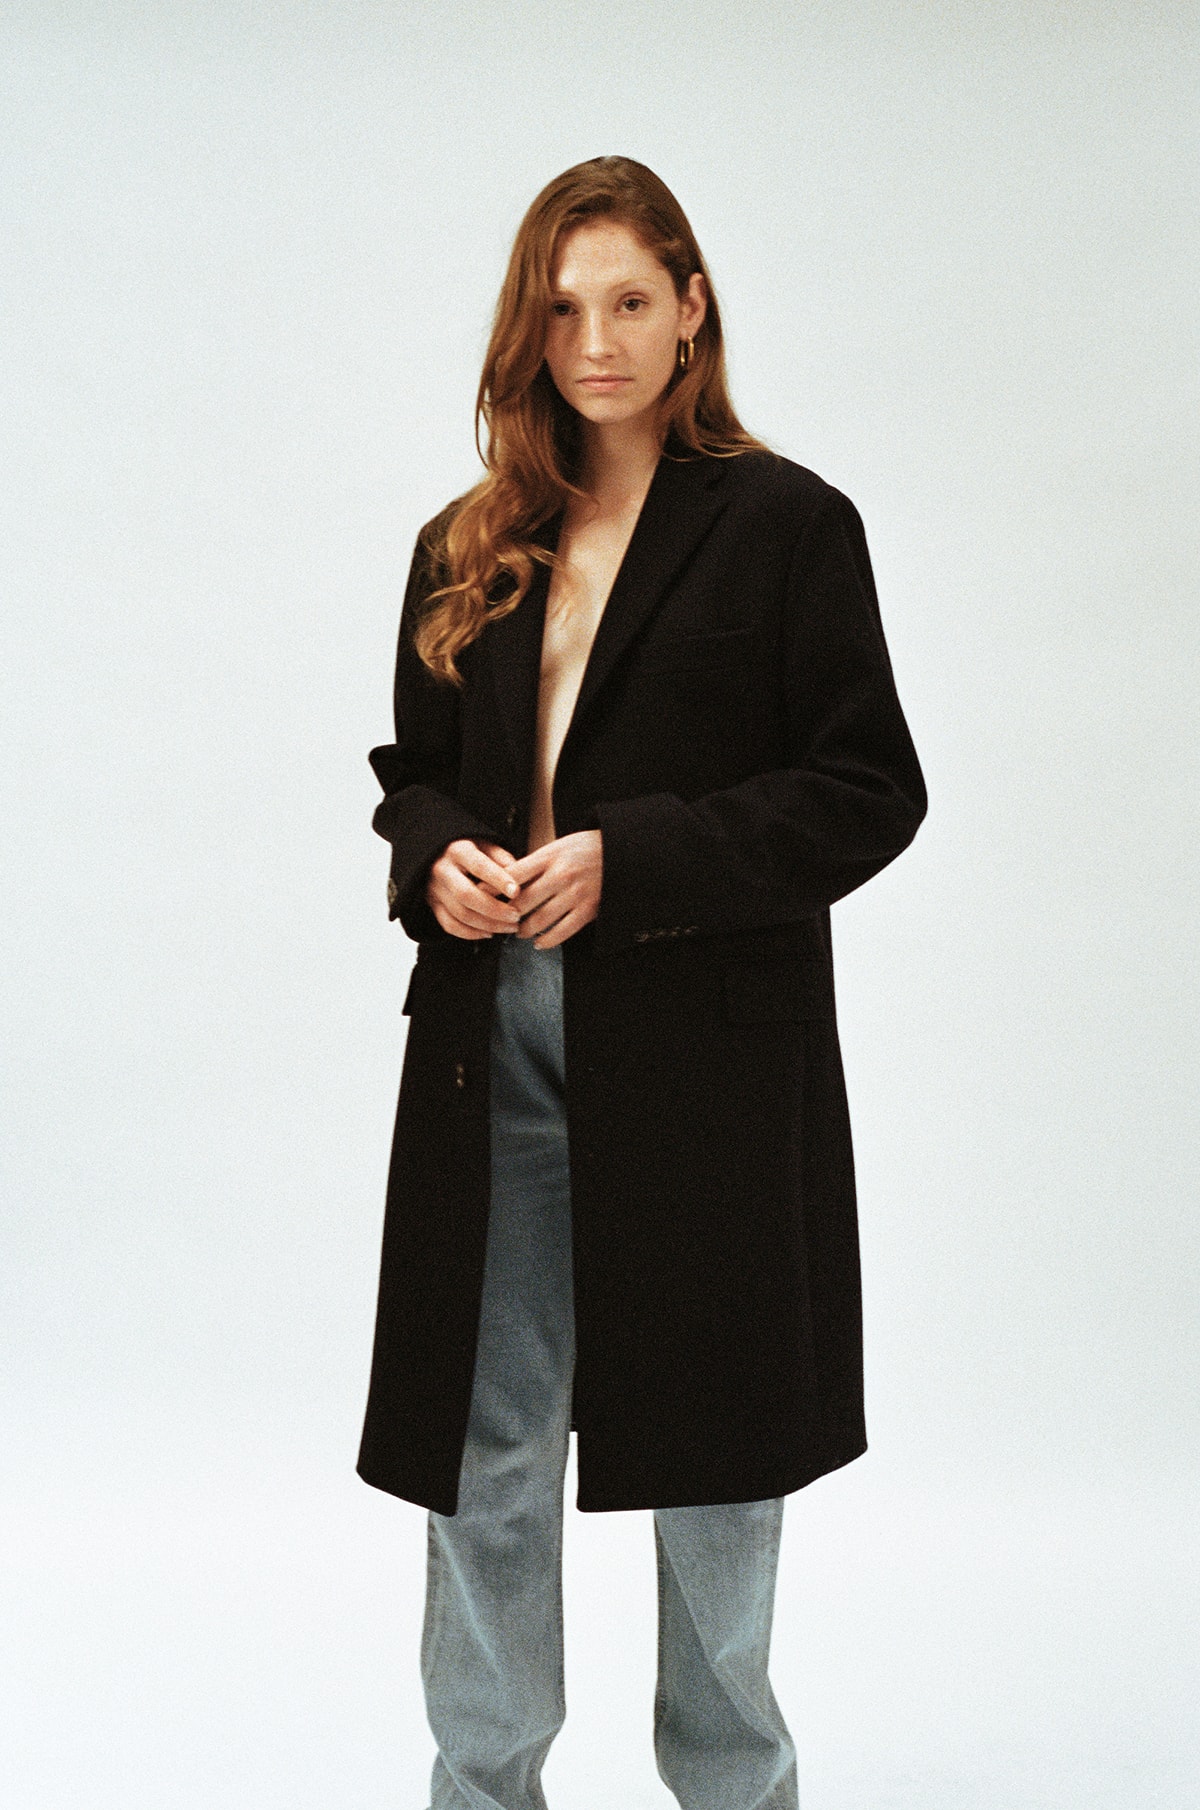 Harmony Paris Fall/Winter 2020 Youth La Giovinezza Collection Lookbook Coat Black